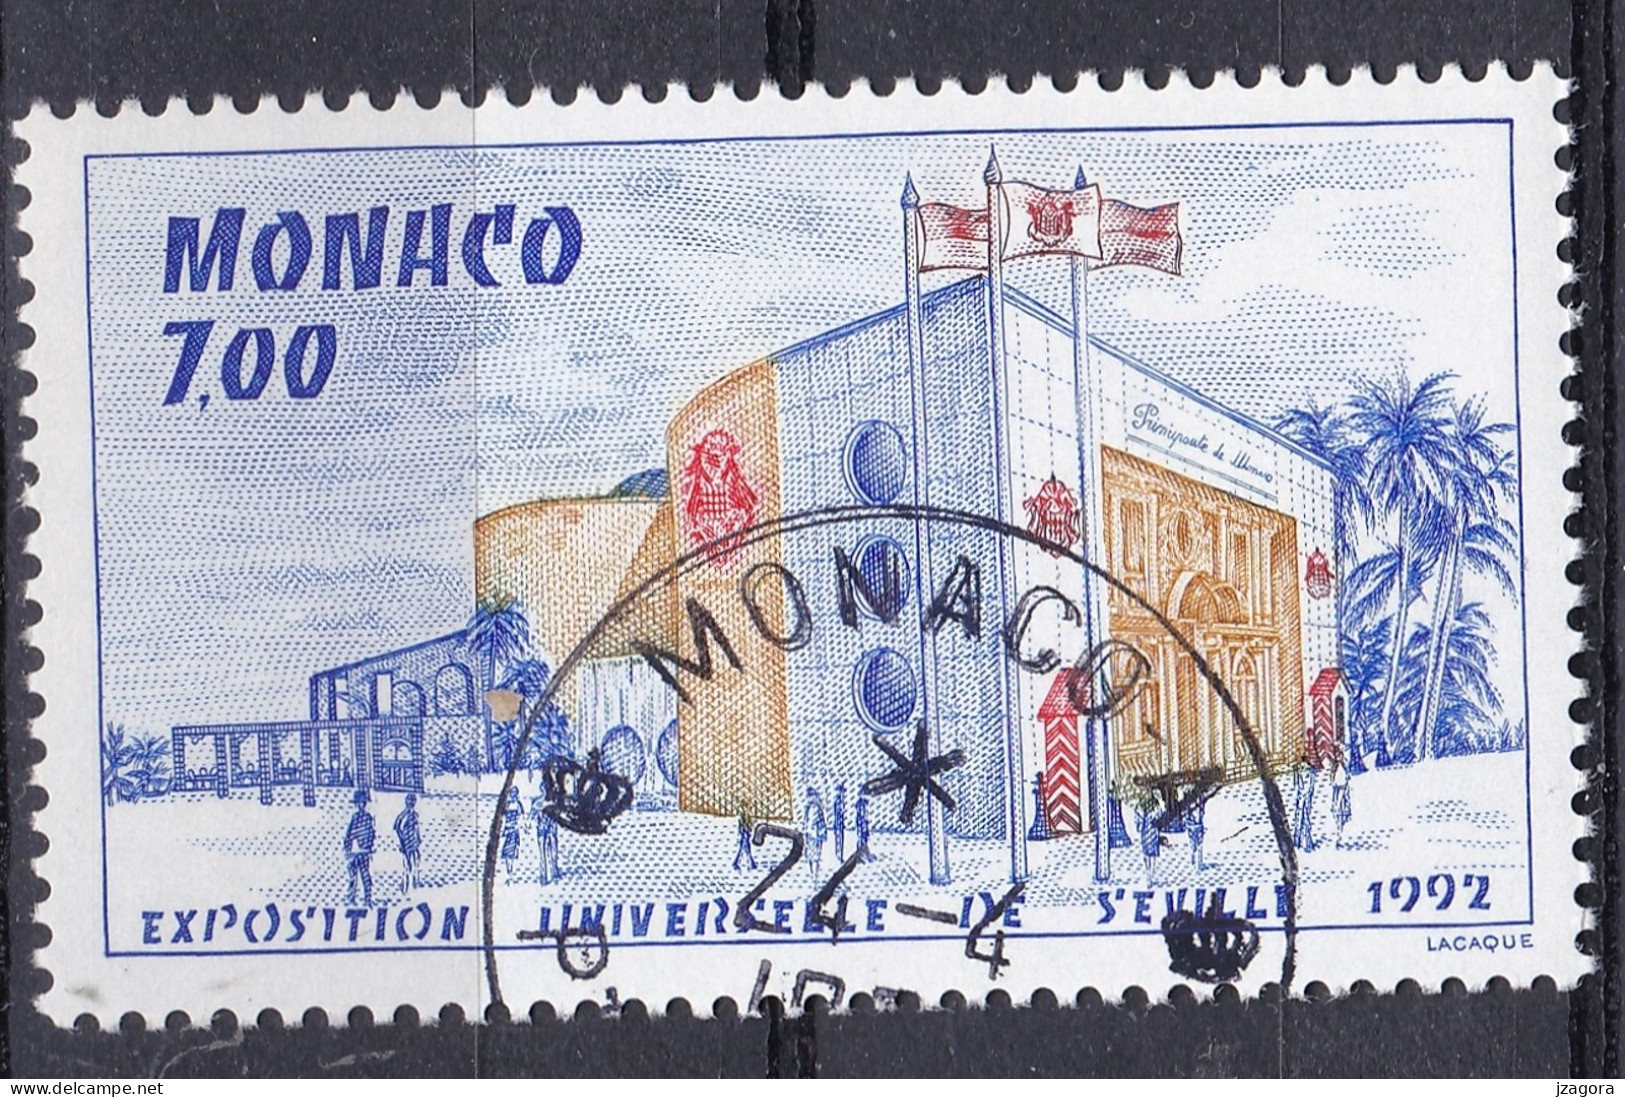 EXPO 1992  EXHIBITION SEVILLA SPAIN - MONACO 2000 MI 2502 USED NH WITH GUM - 1992 – Sevilla (Spanje)